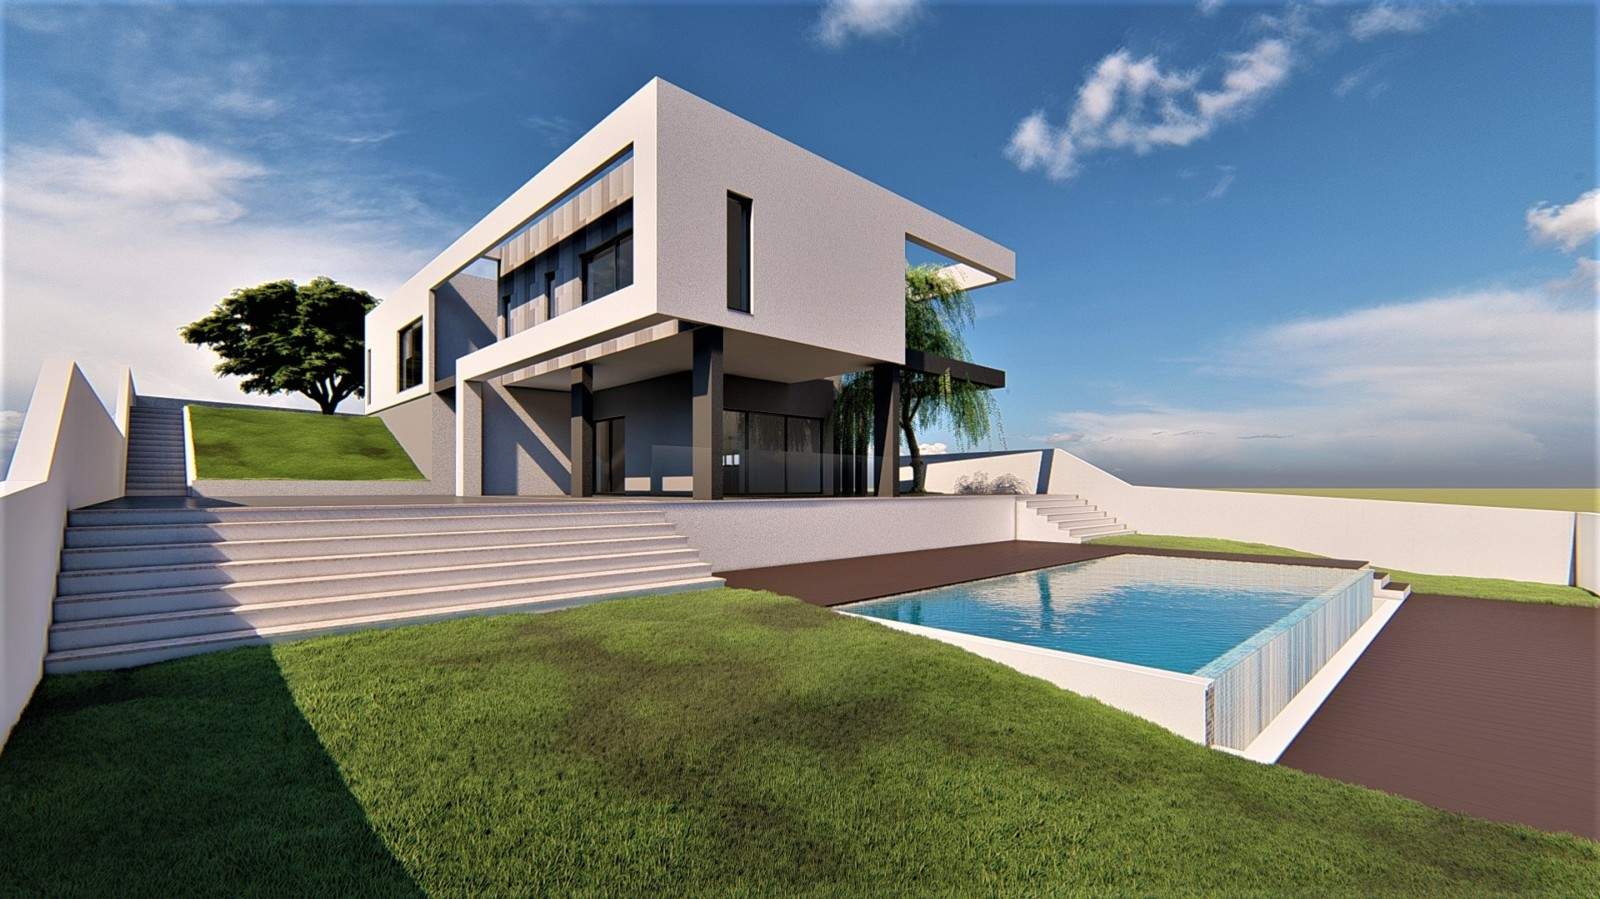 3 bedroom villa under construction for sale, in Vilamoura, Algarve_213464